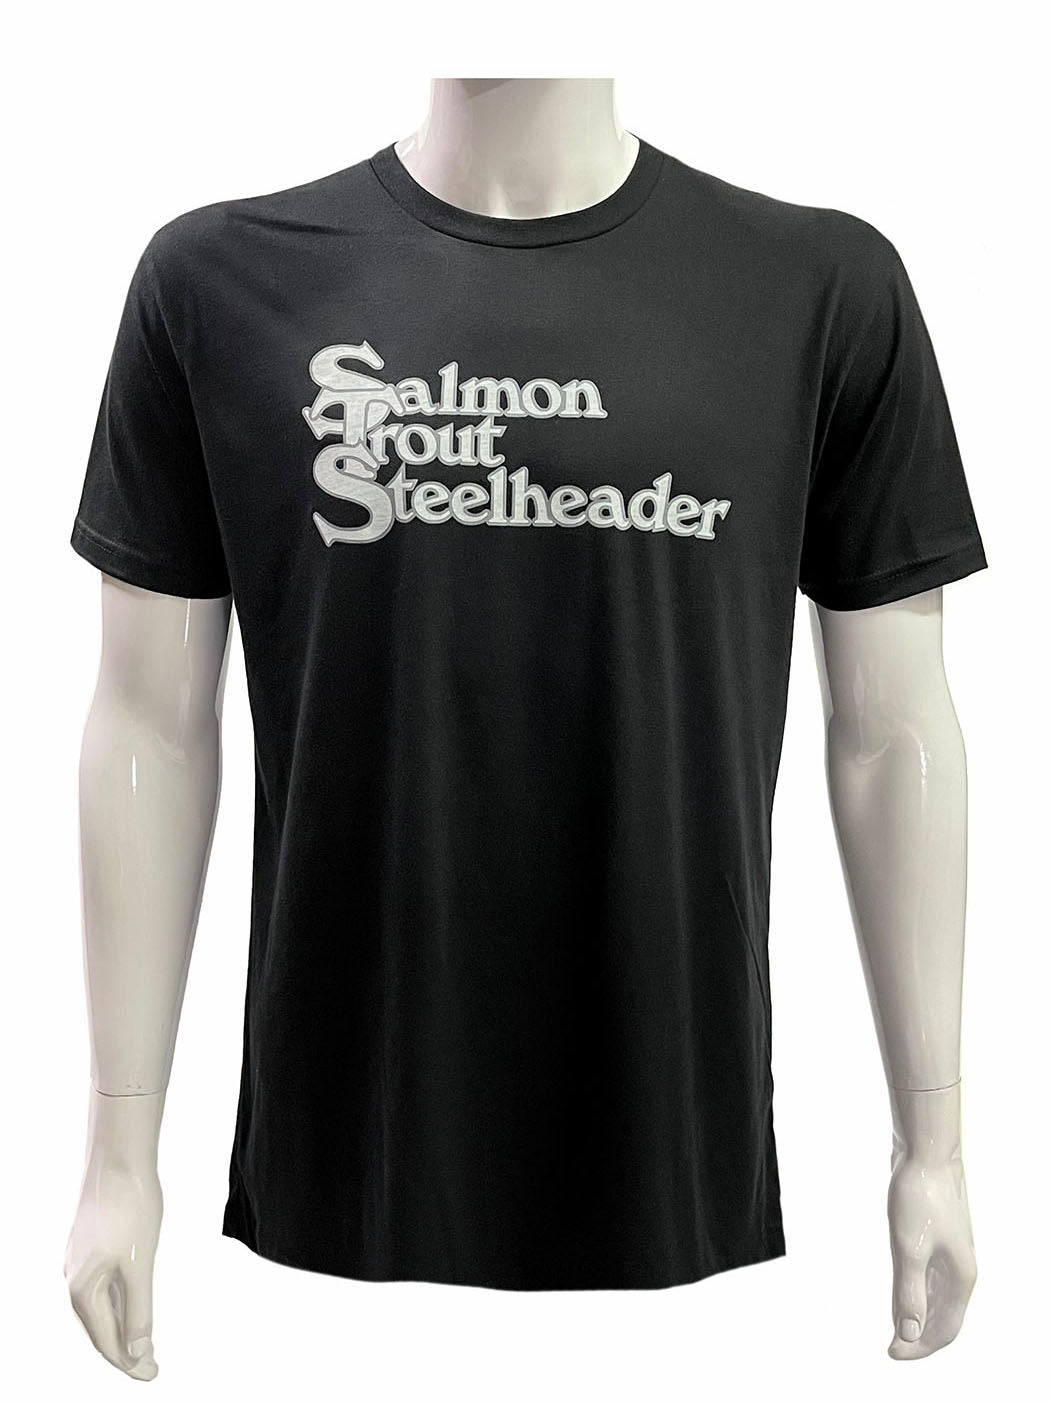 Salmon Trout Steelheader T-Shirt Black w/ Silver Logo